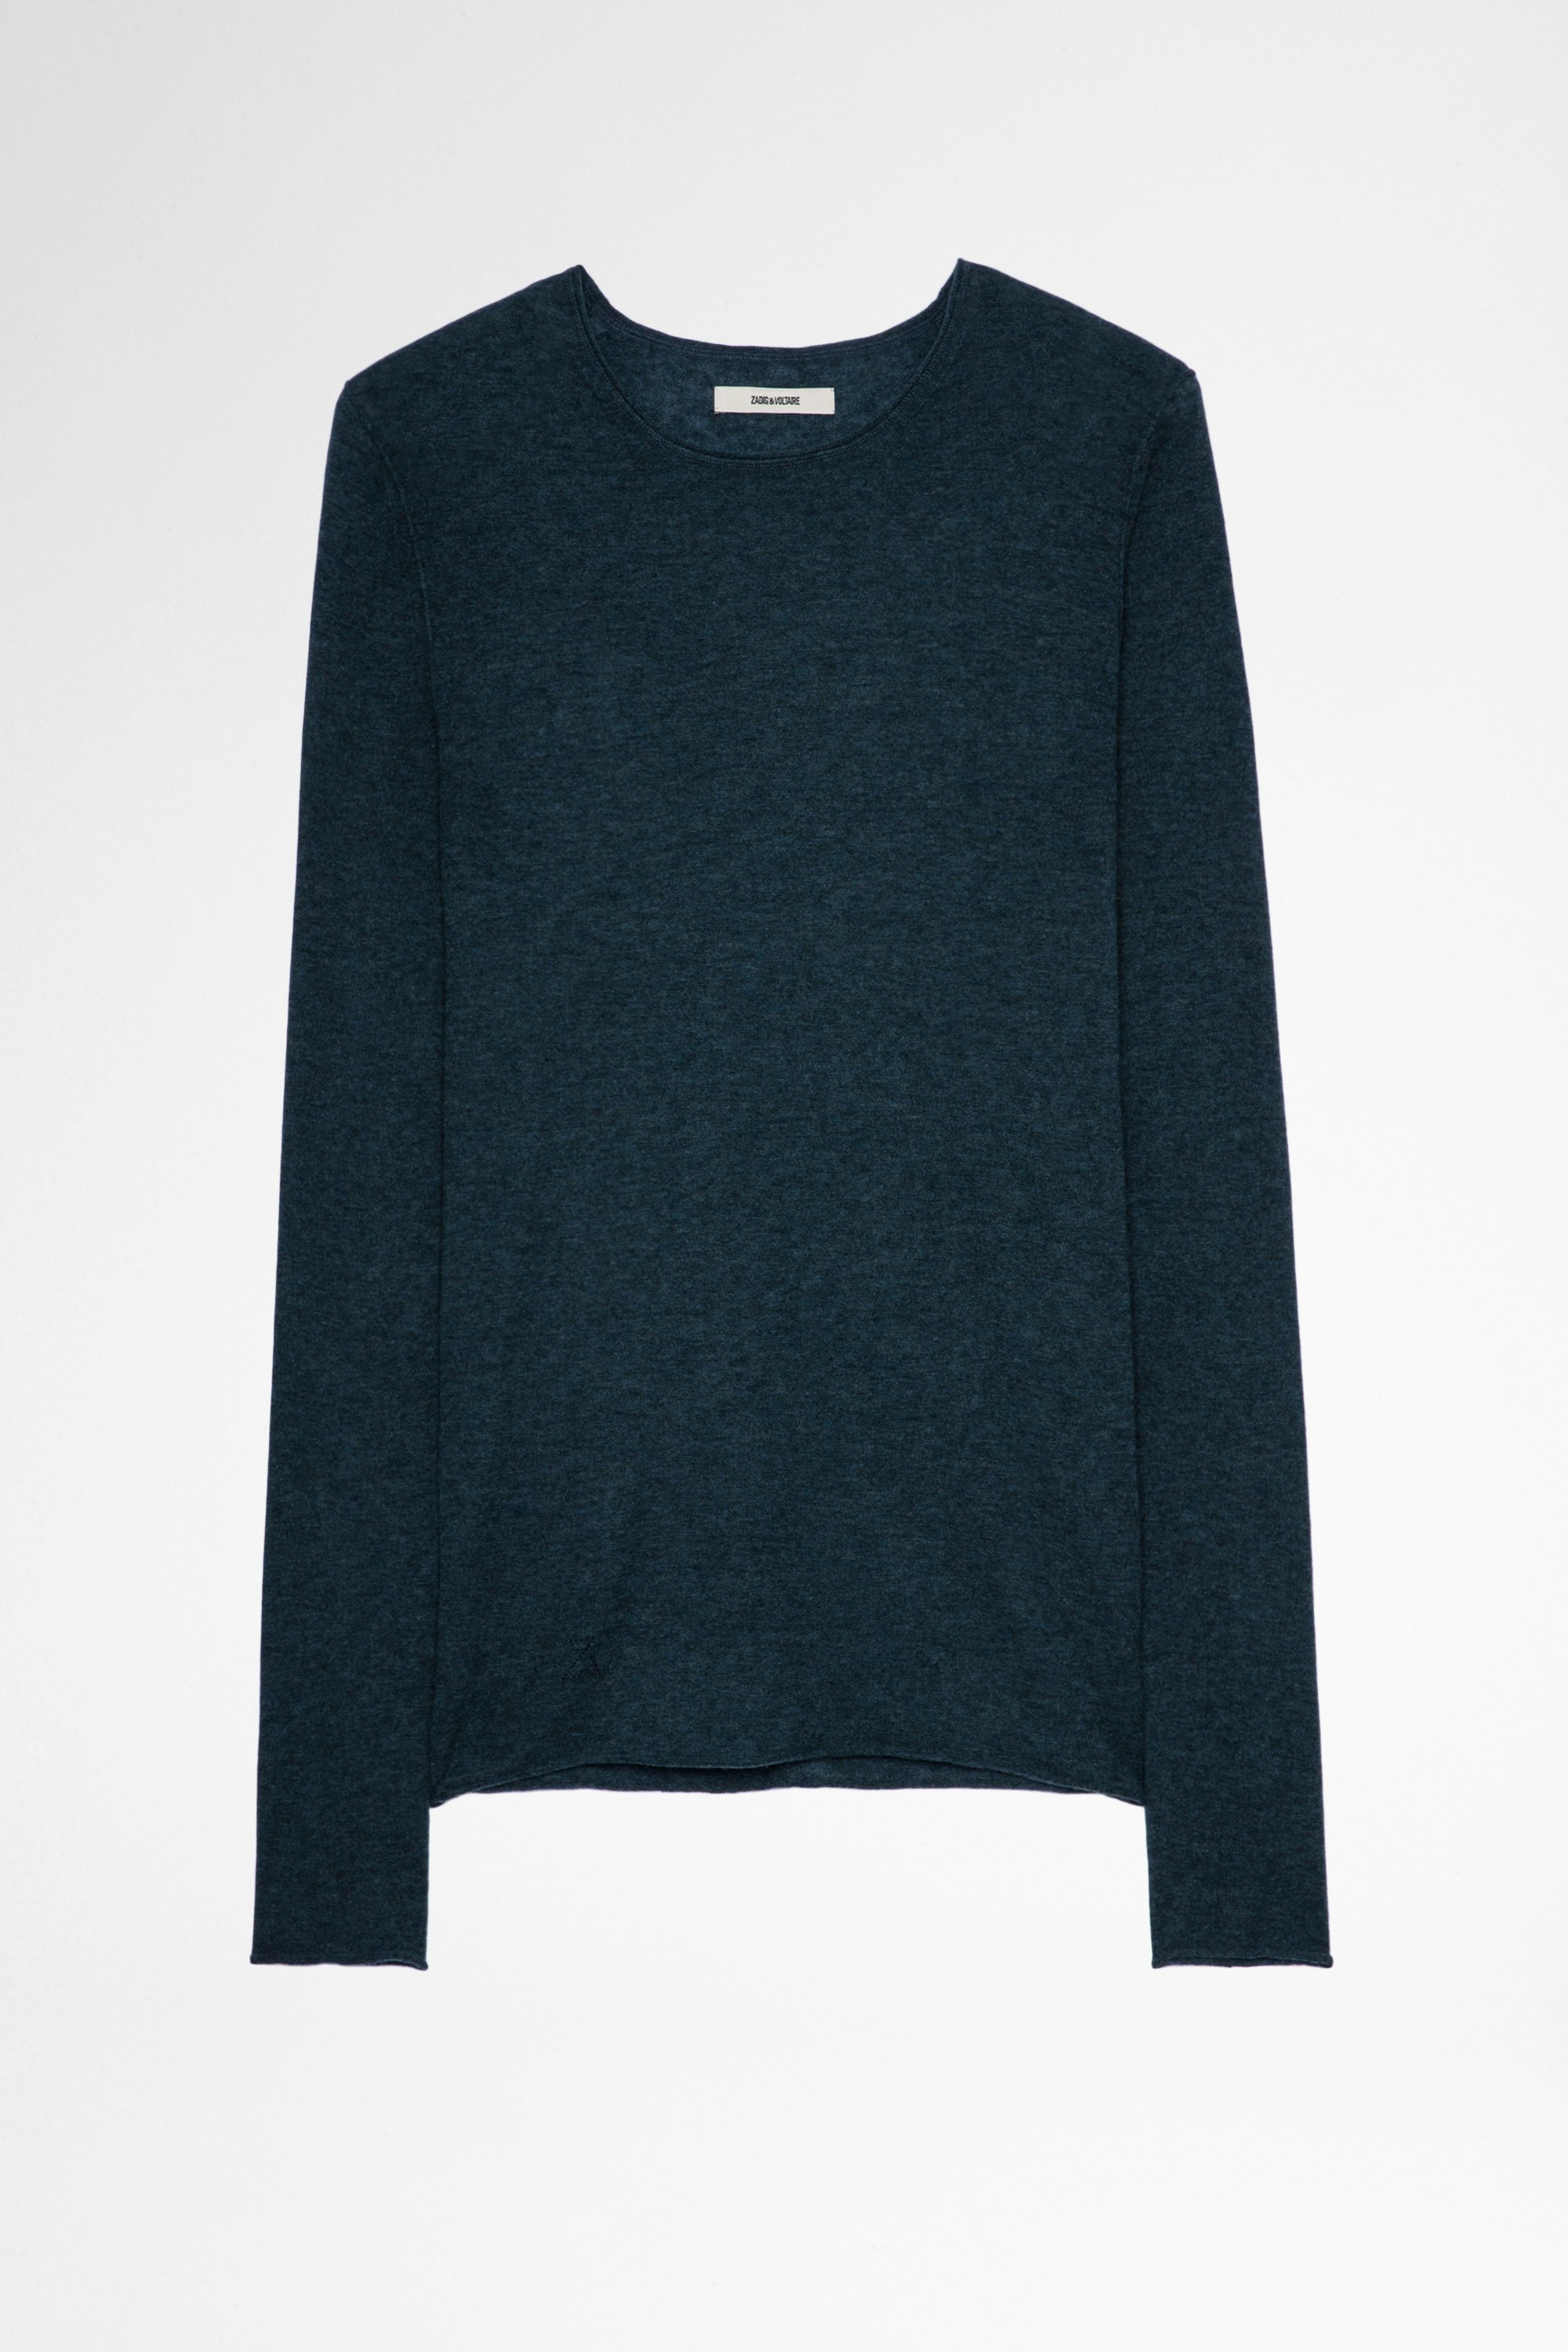 Teiss Cashmere Jumper Men’s blue cashmere sweater